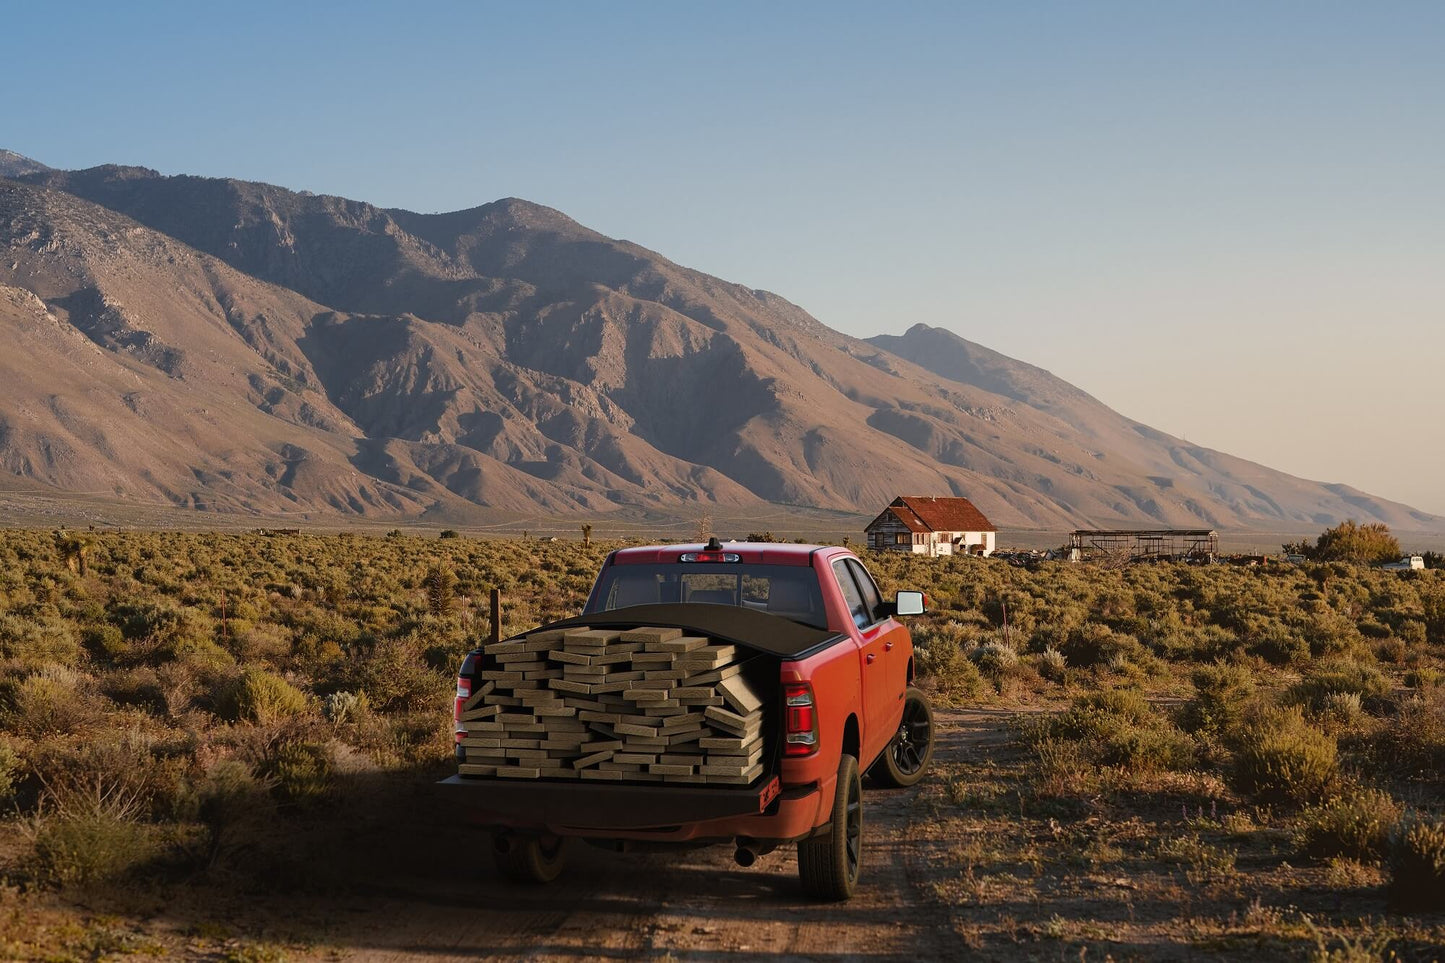 Red Ram 1500 carryng lumber in the desert mountains.